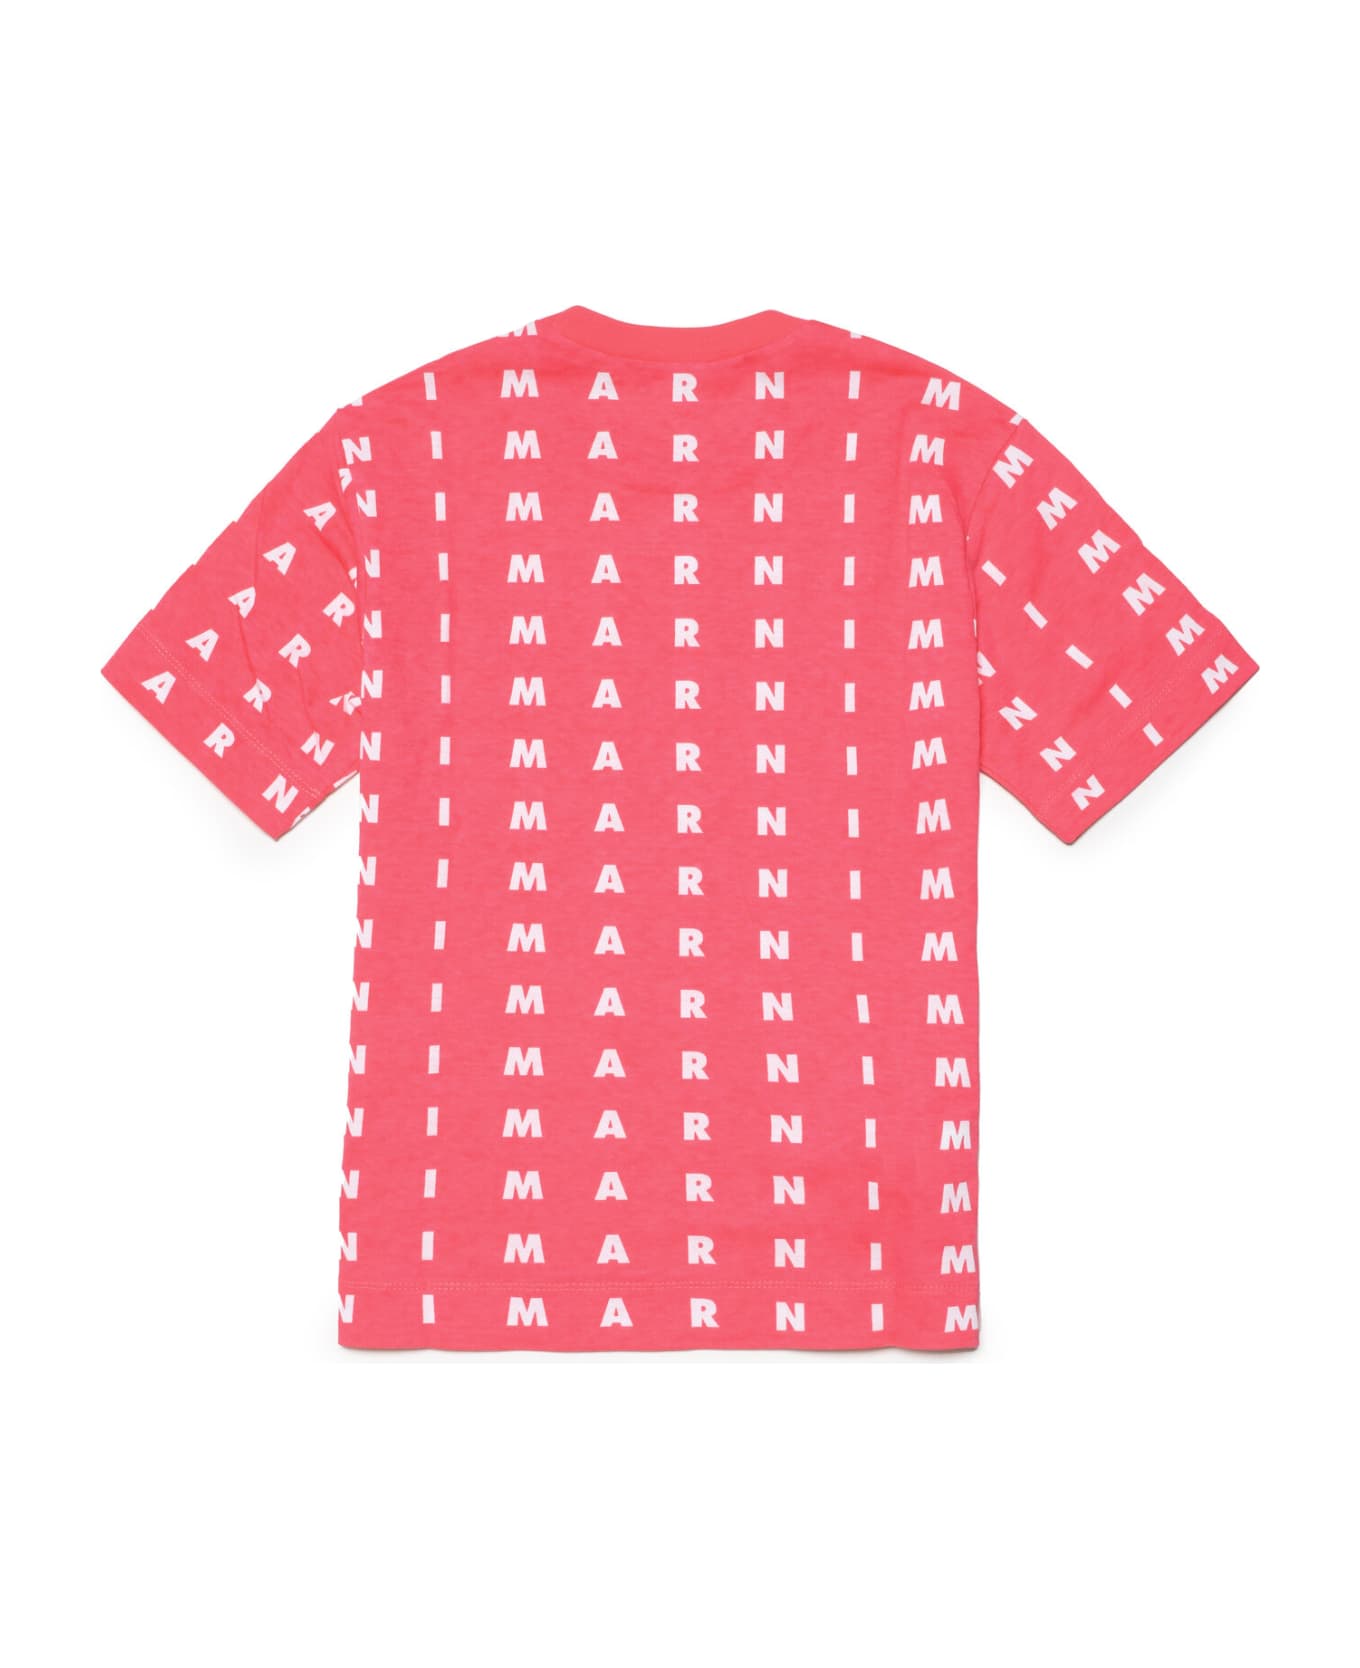 Marni Mt158u T-shirt Marni Fuchsia Jersey T-shirt With Small Allover Accessories - Bright fuxya